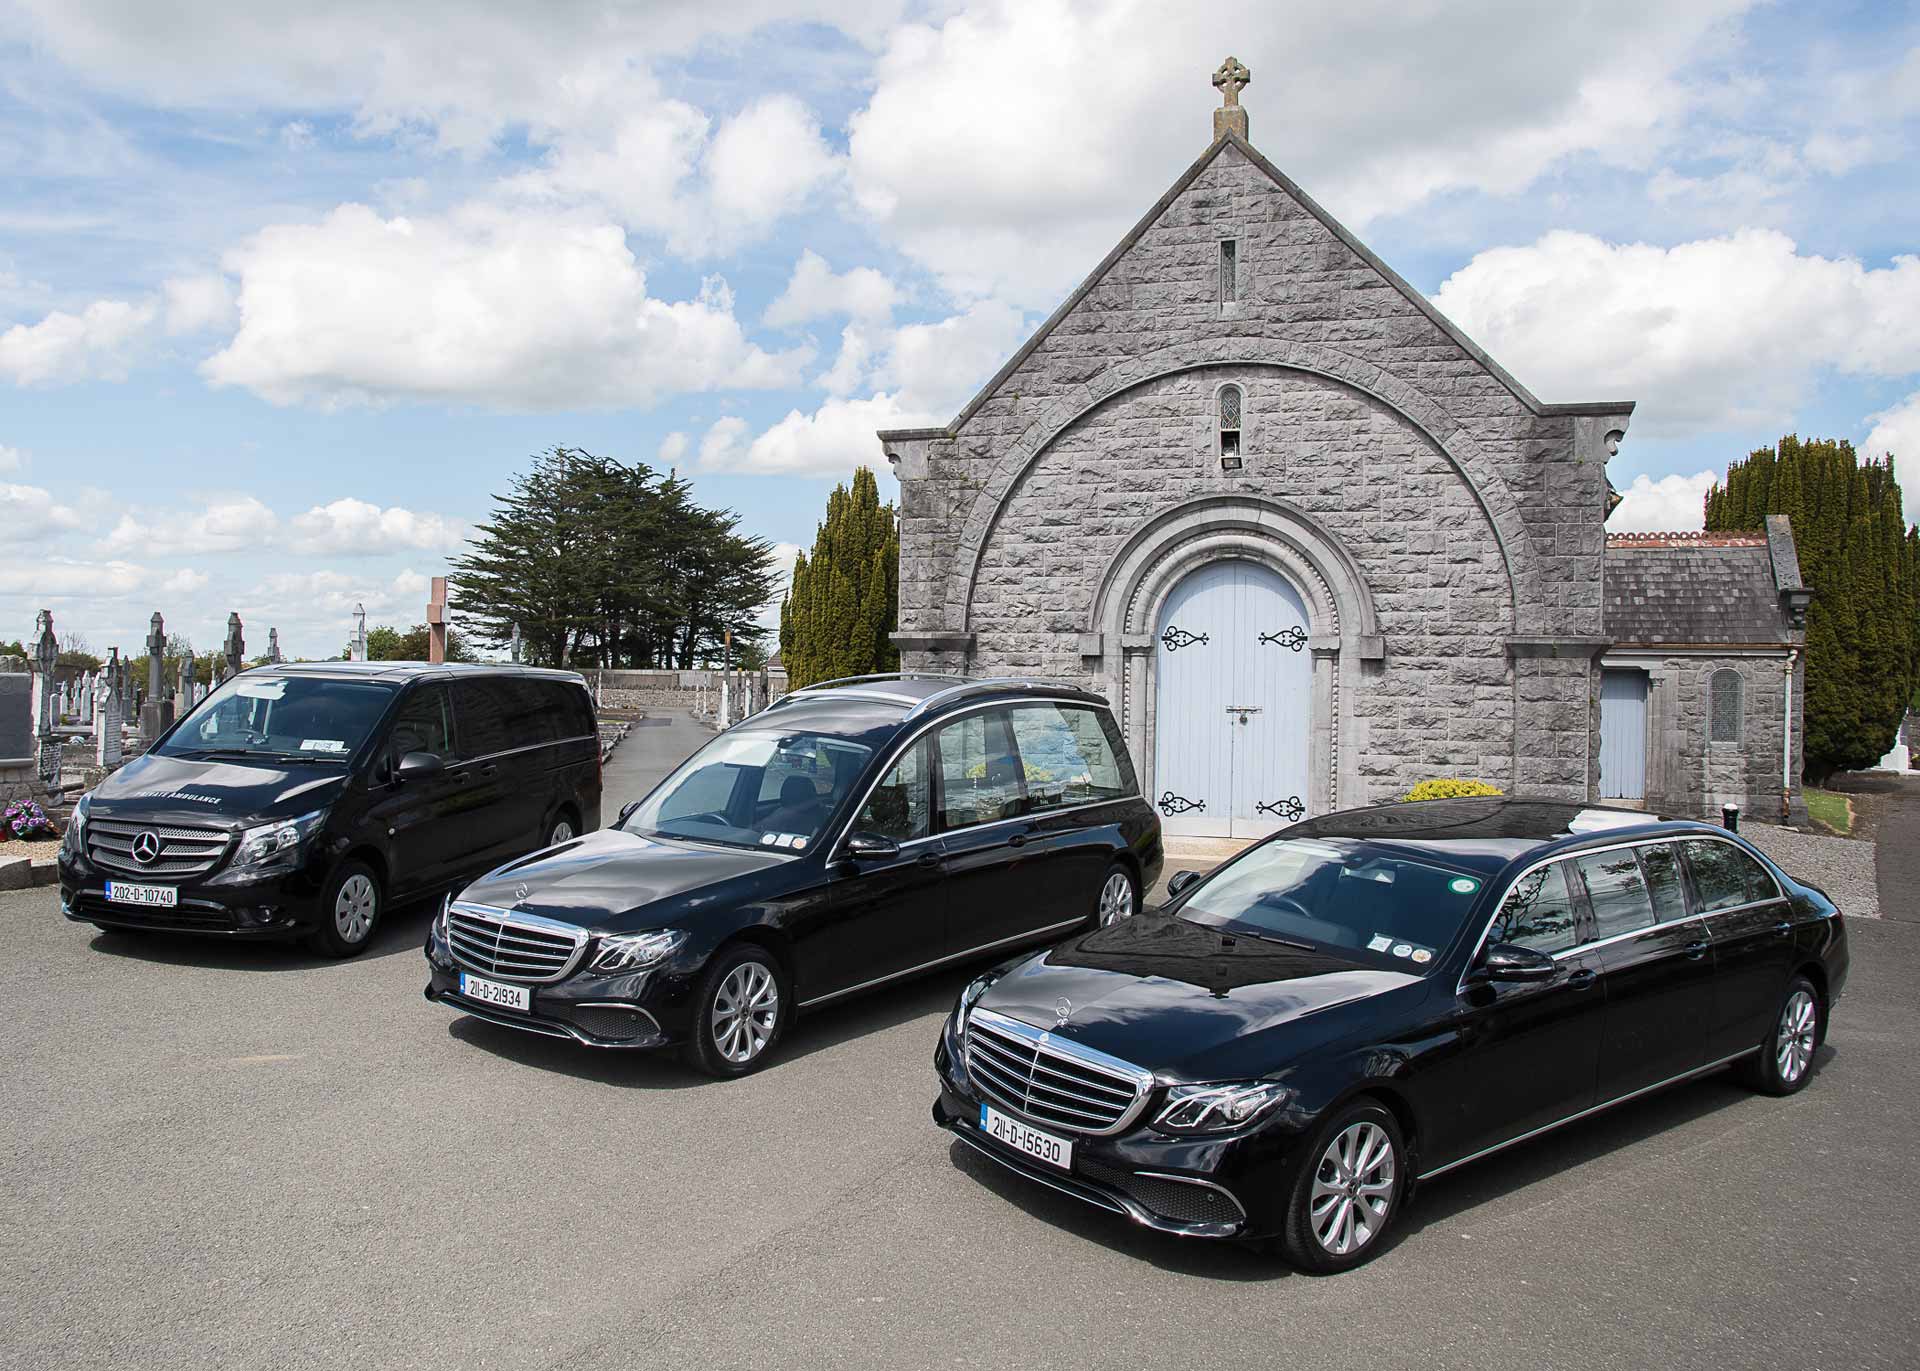 Black limousine, black minibus and a black hearse outside a church